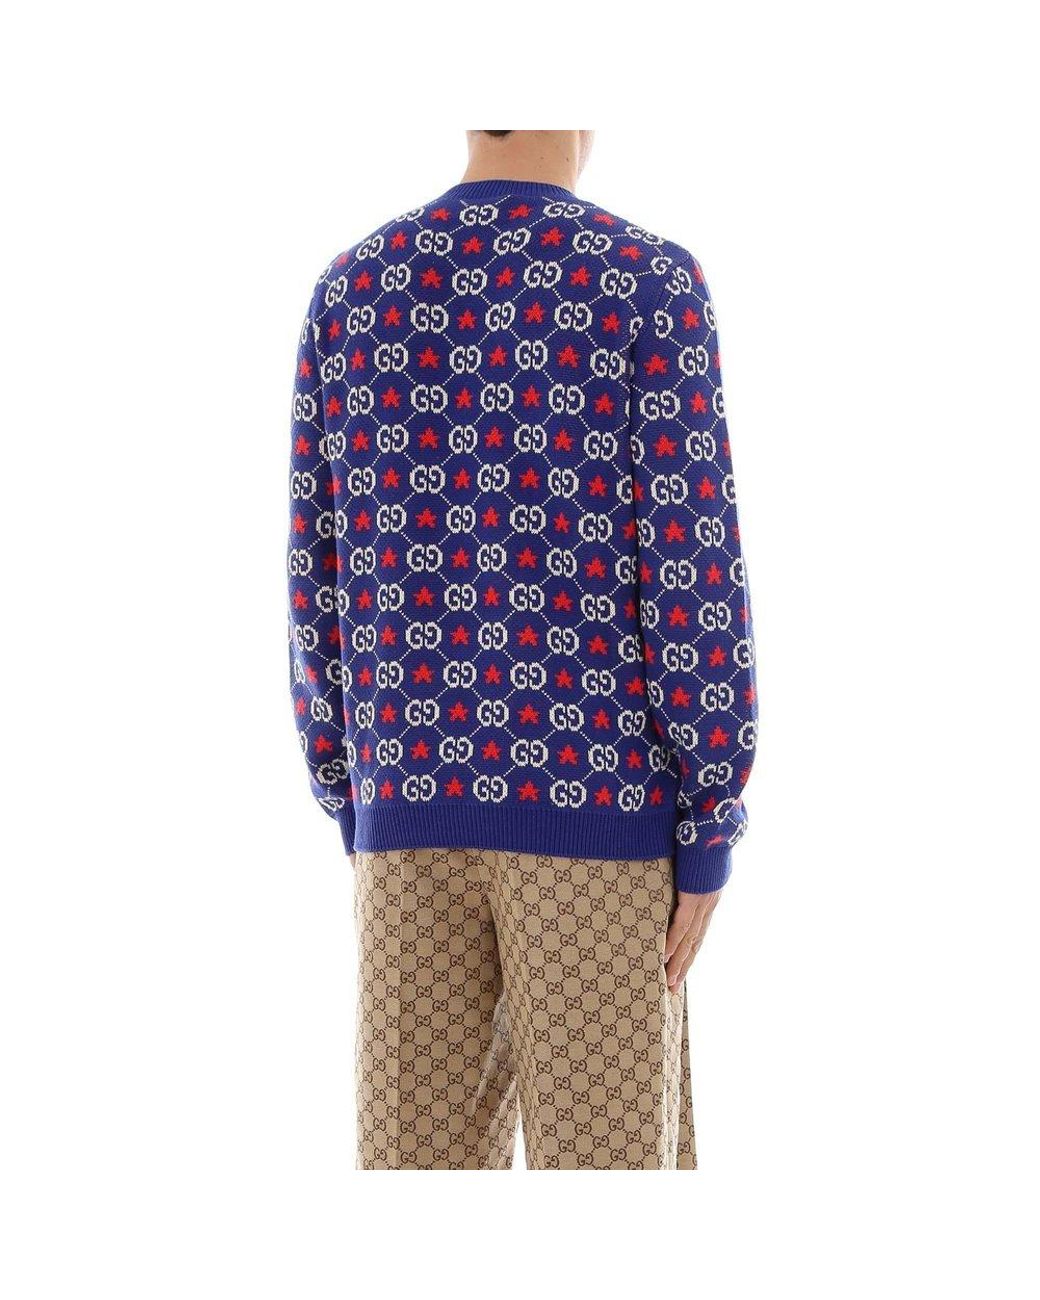 Gucci Monogram Motif Sweater in Blue for Men